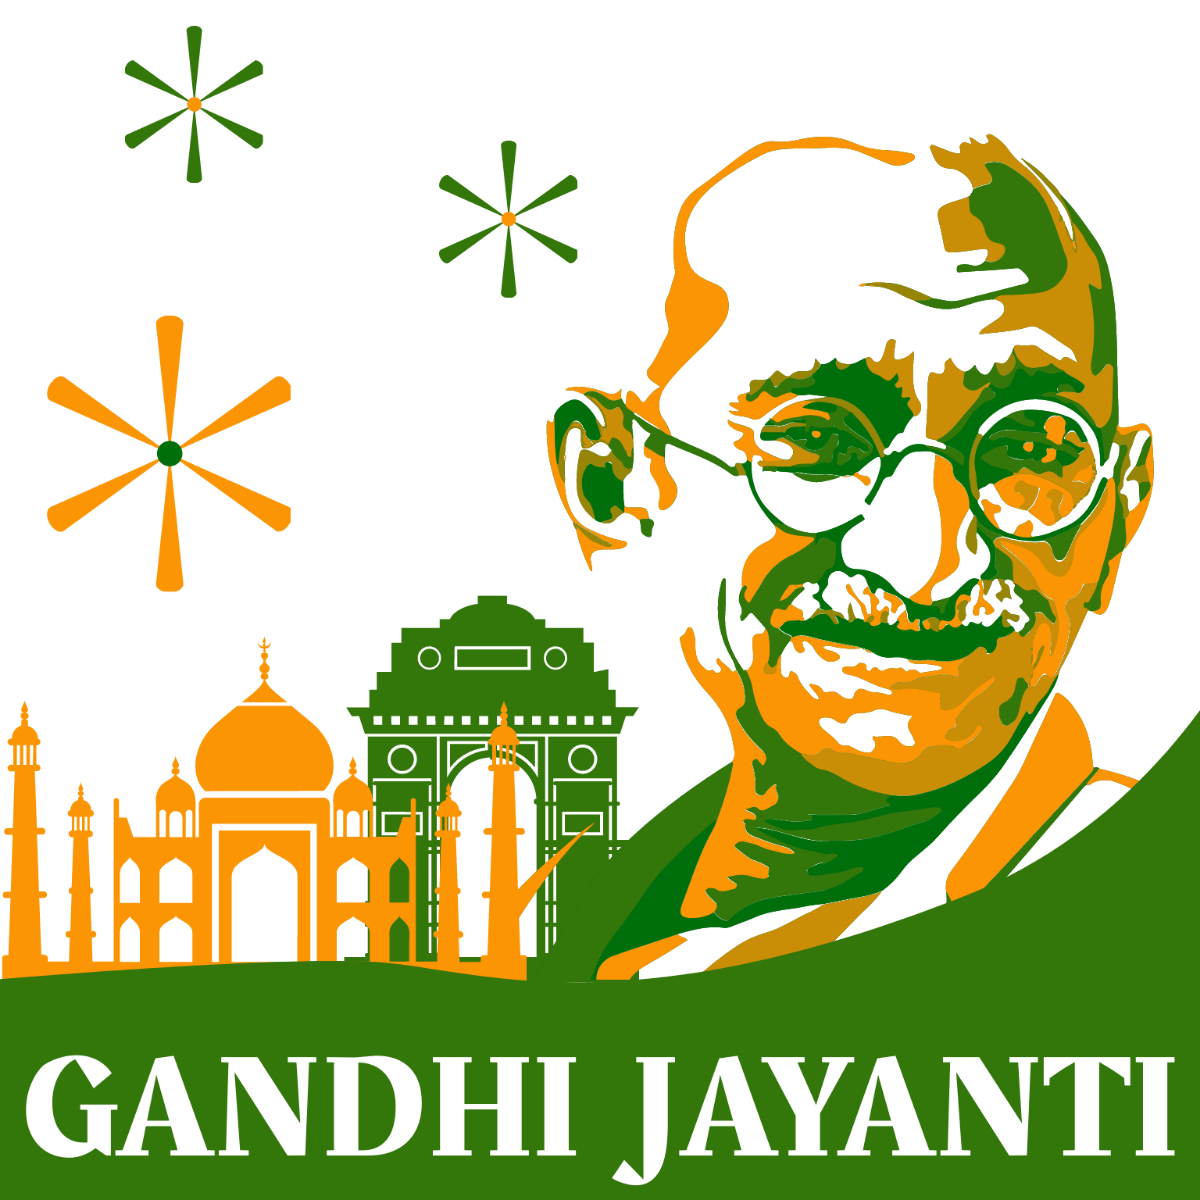 Happy Gandhi Jayanti Background With Mahatma Gandhi Sketch Vector Royalty  Free SVG, Cliparts, Vectors, and Stock Illustration. Image 155787439.